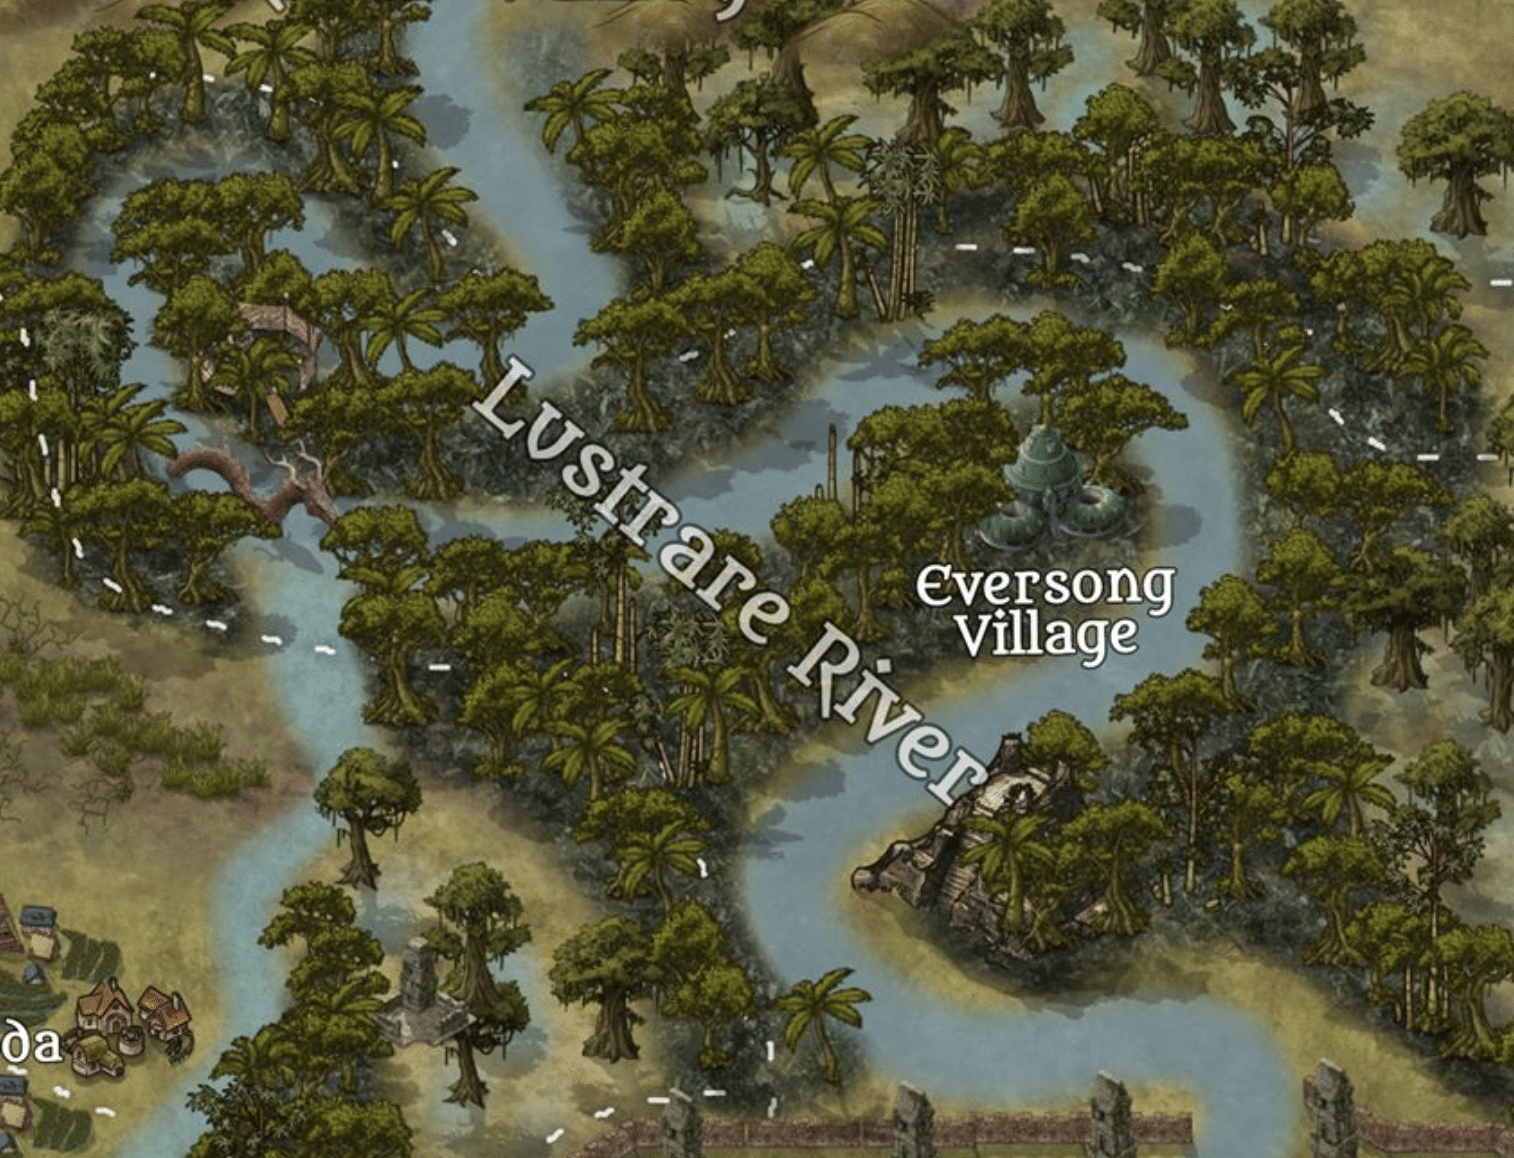 The Lustrare River